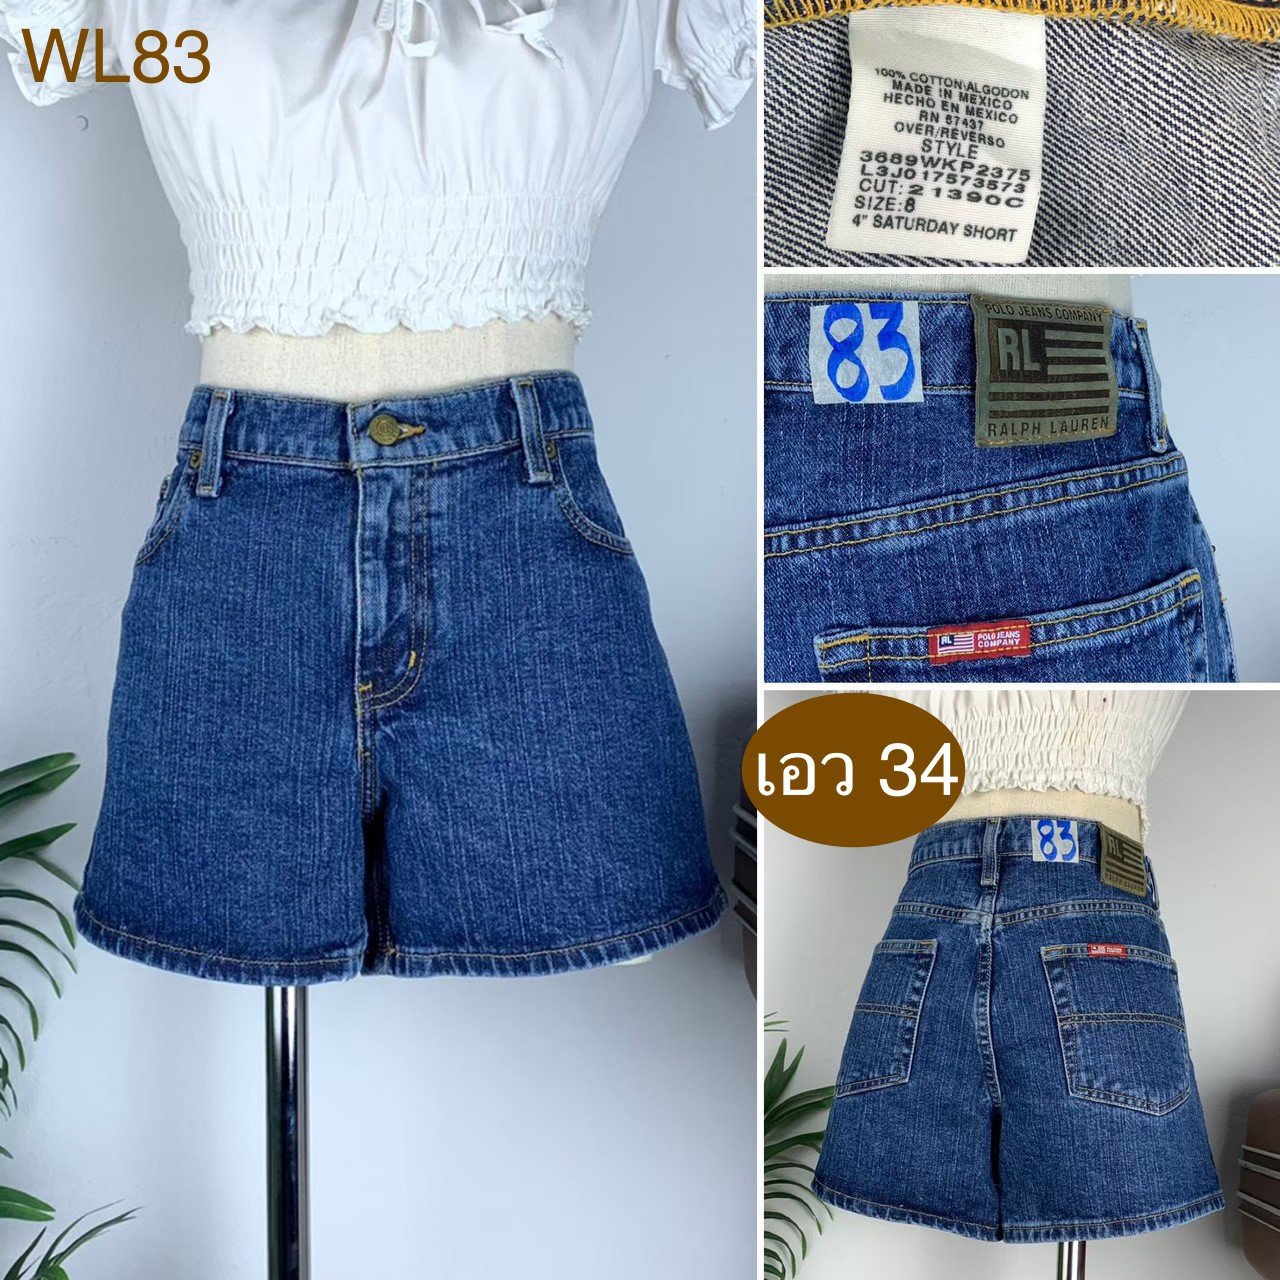 ♥️ รหัสWL83 ▪️ป้าย Polo Jeans Company  ▪️ เอว 34" สะโพก 40" ต้นขา 25" ▪️เป้า 9" ยาว 12.5" (นิ้ว)